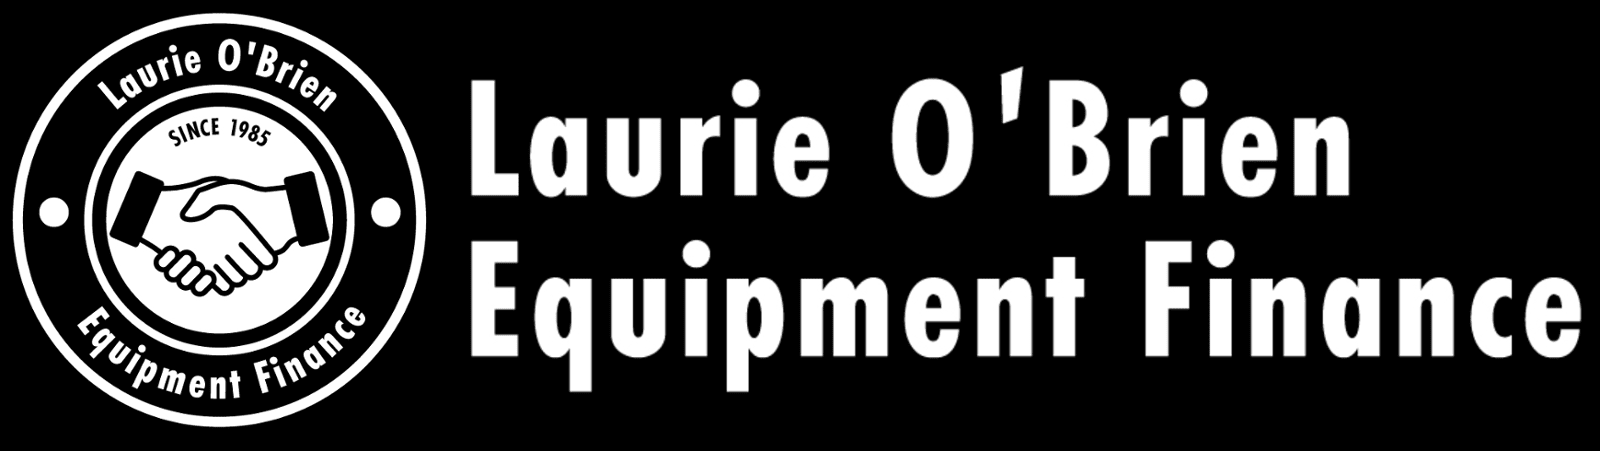 Laurie O'Brien Equipment Finance